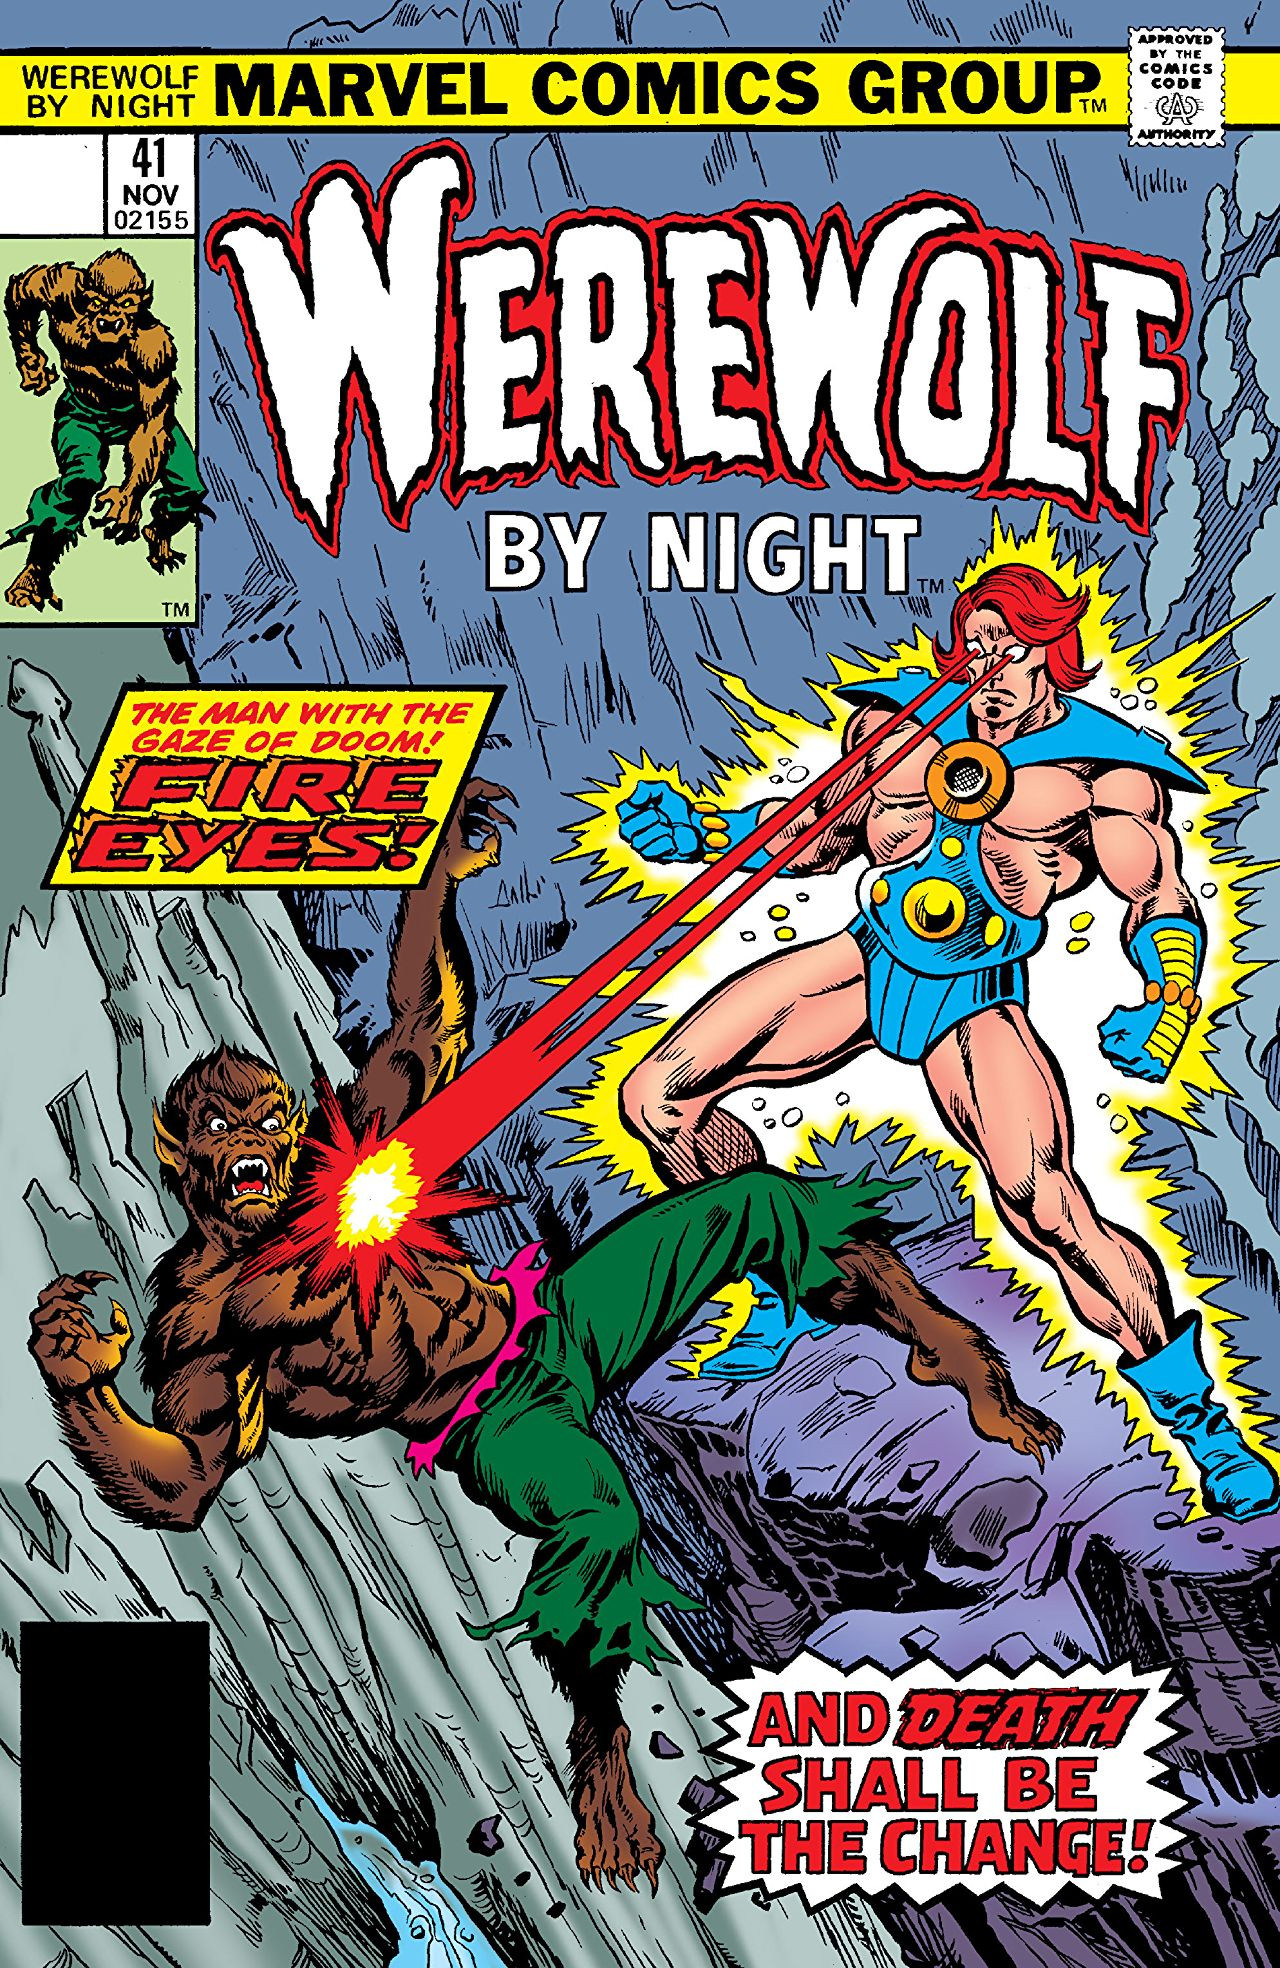 Werewolf by Night Vol 1 41 - Marvel Comics Database